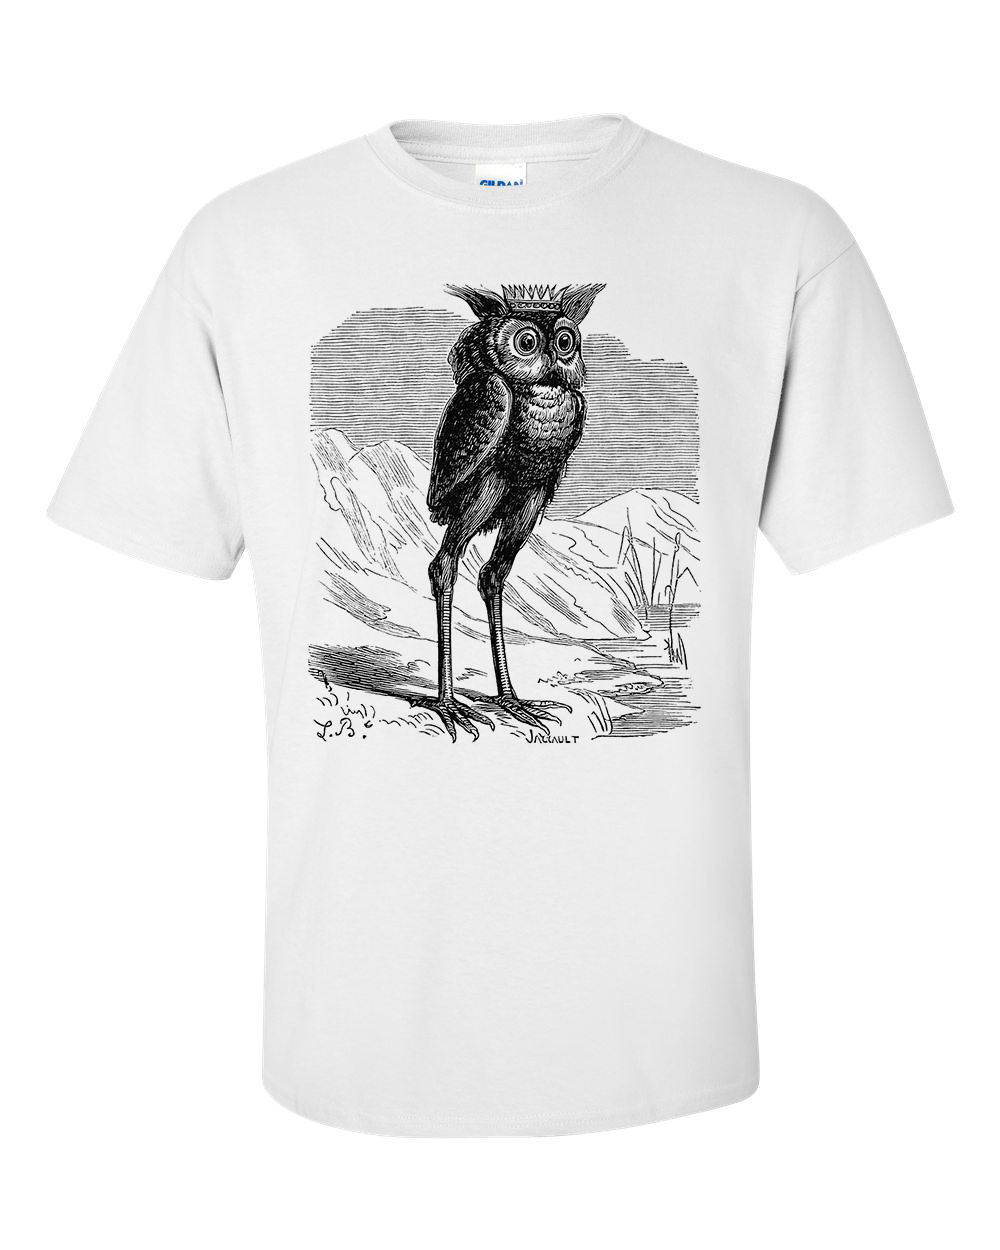 Stolas Demon Owl by Louis Breton Drawing T-Shirt